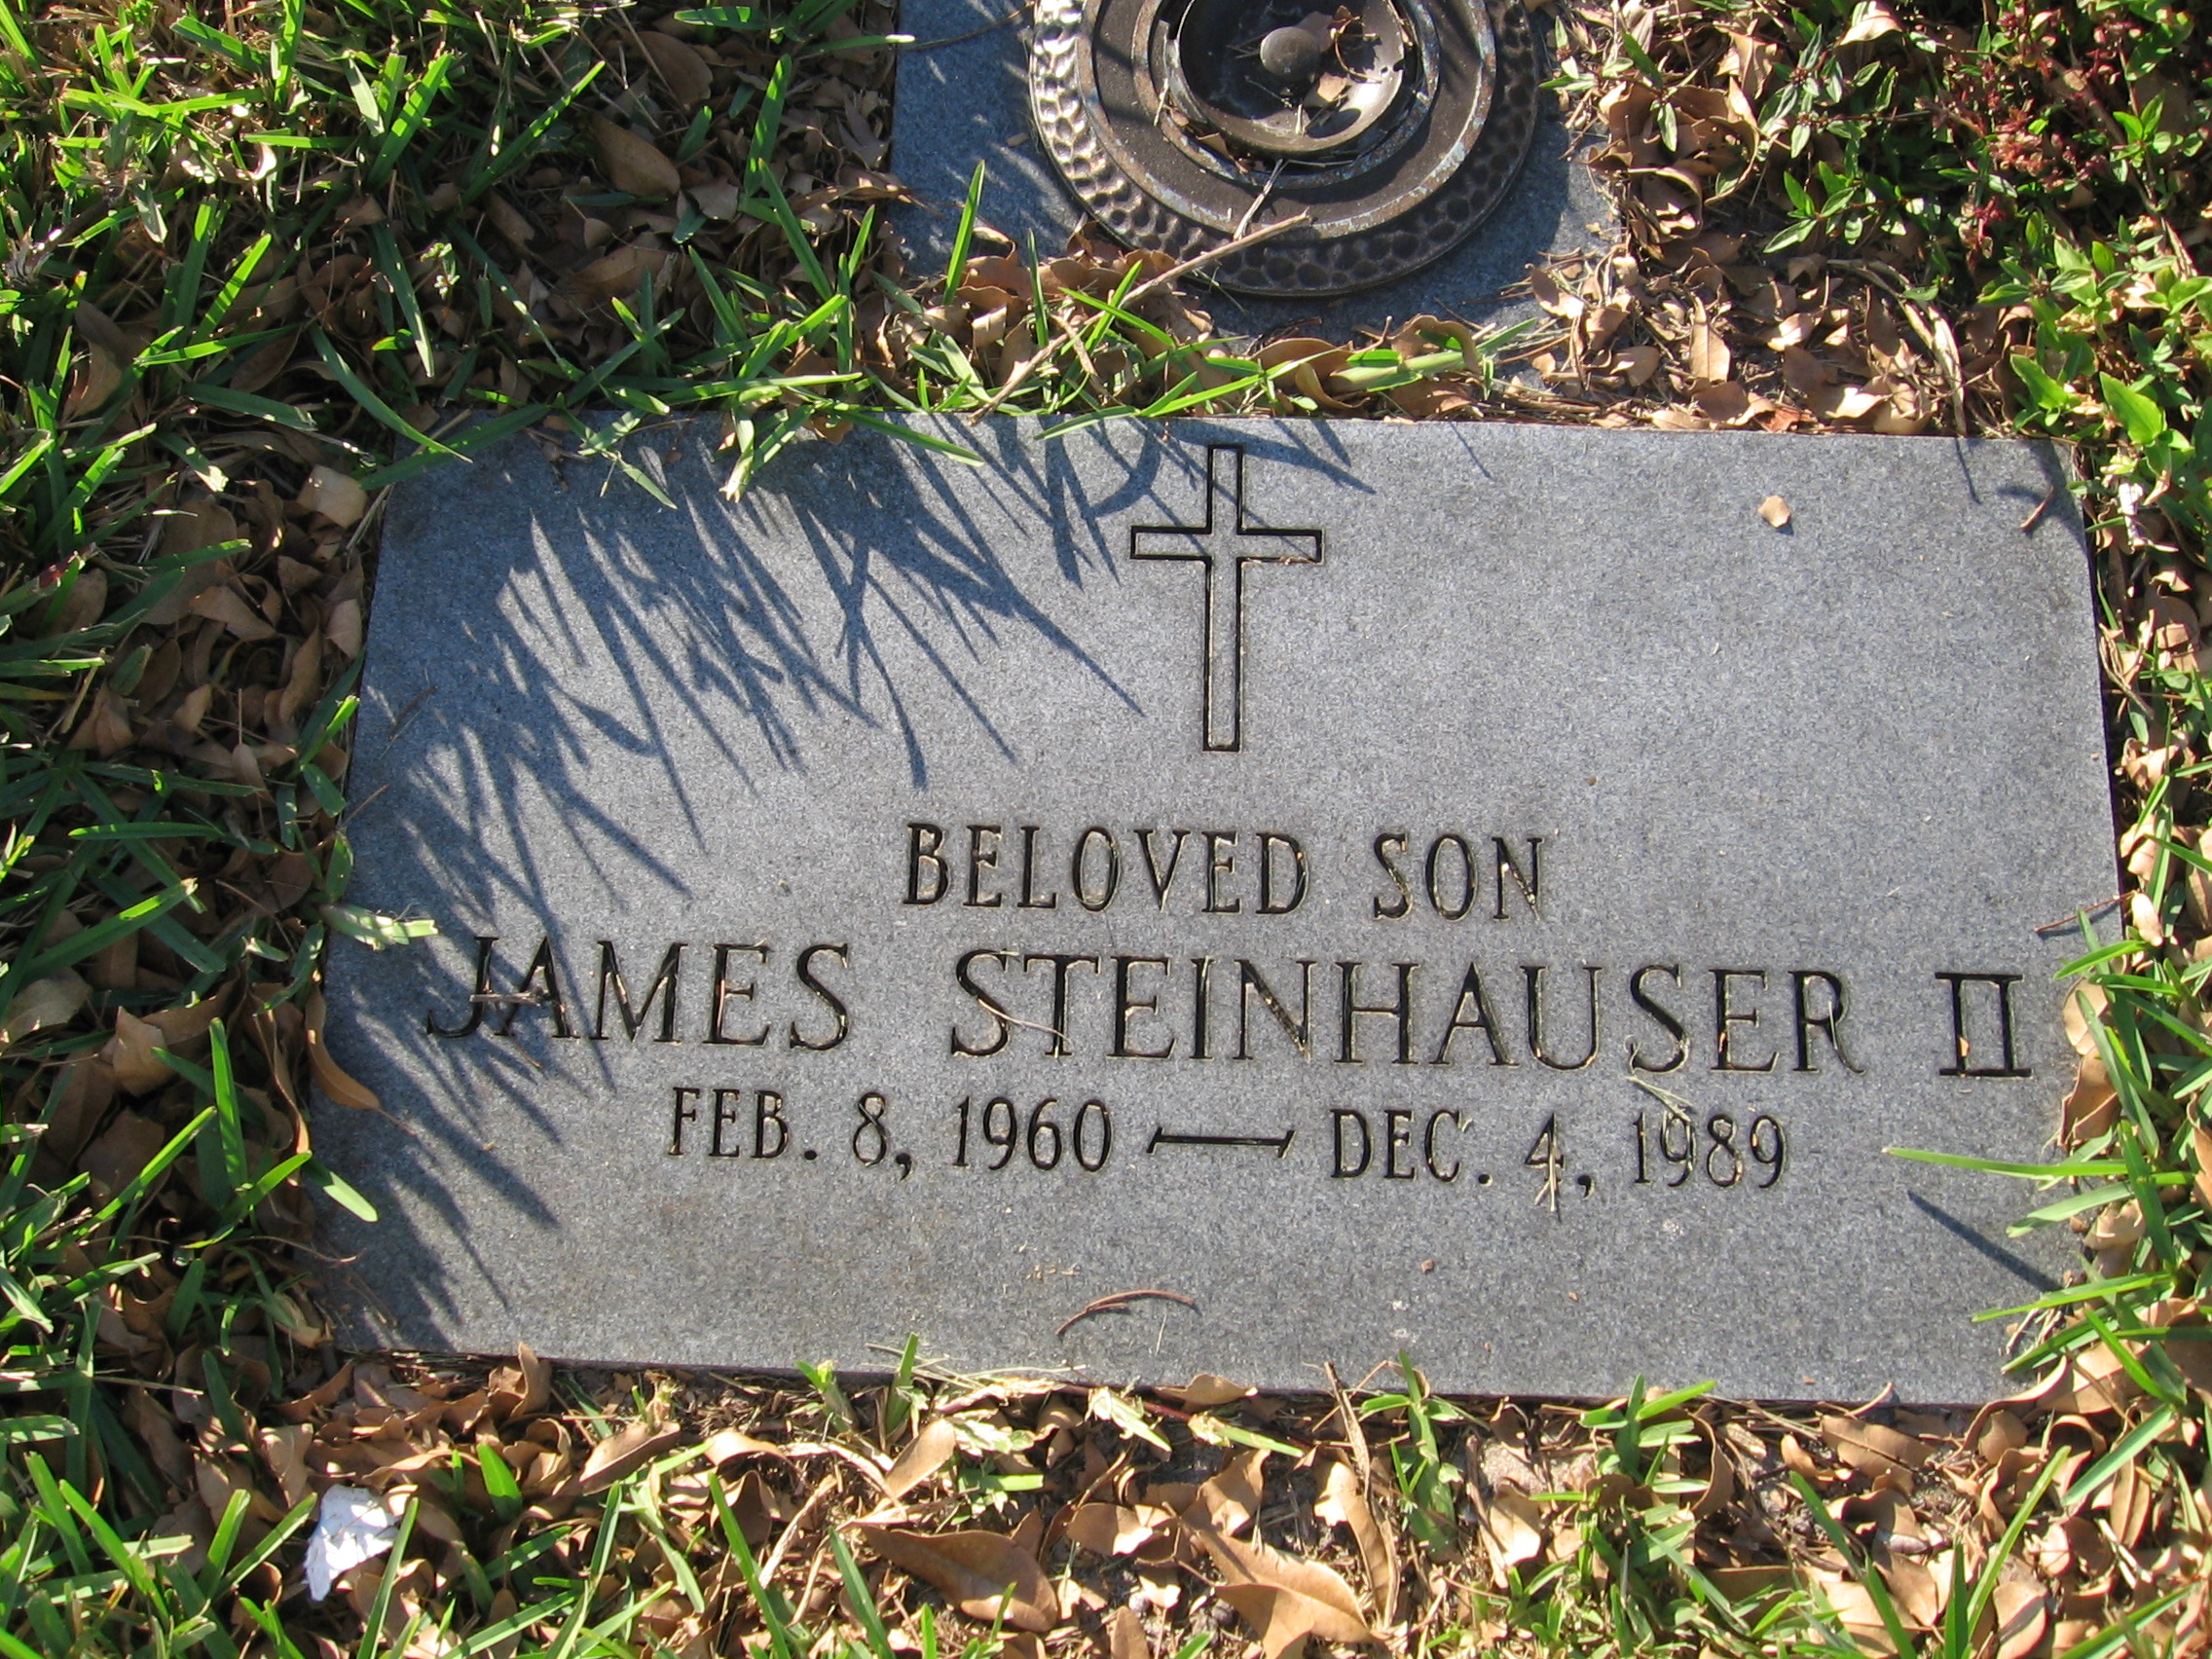 James Steinhauser, II